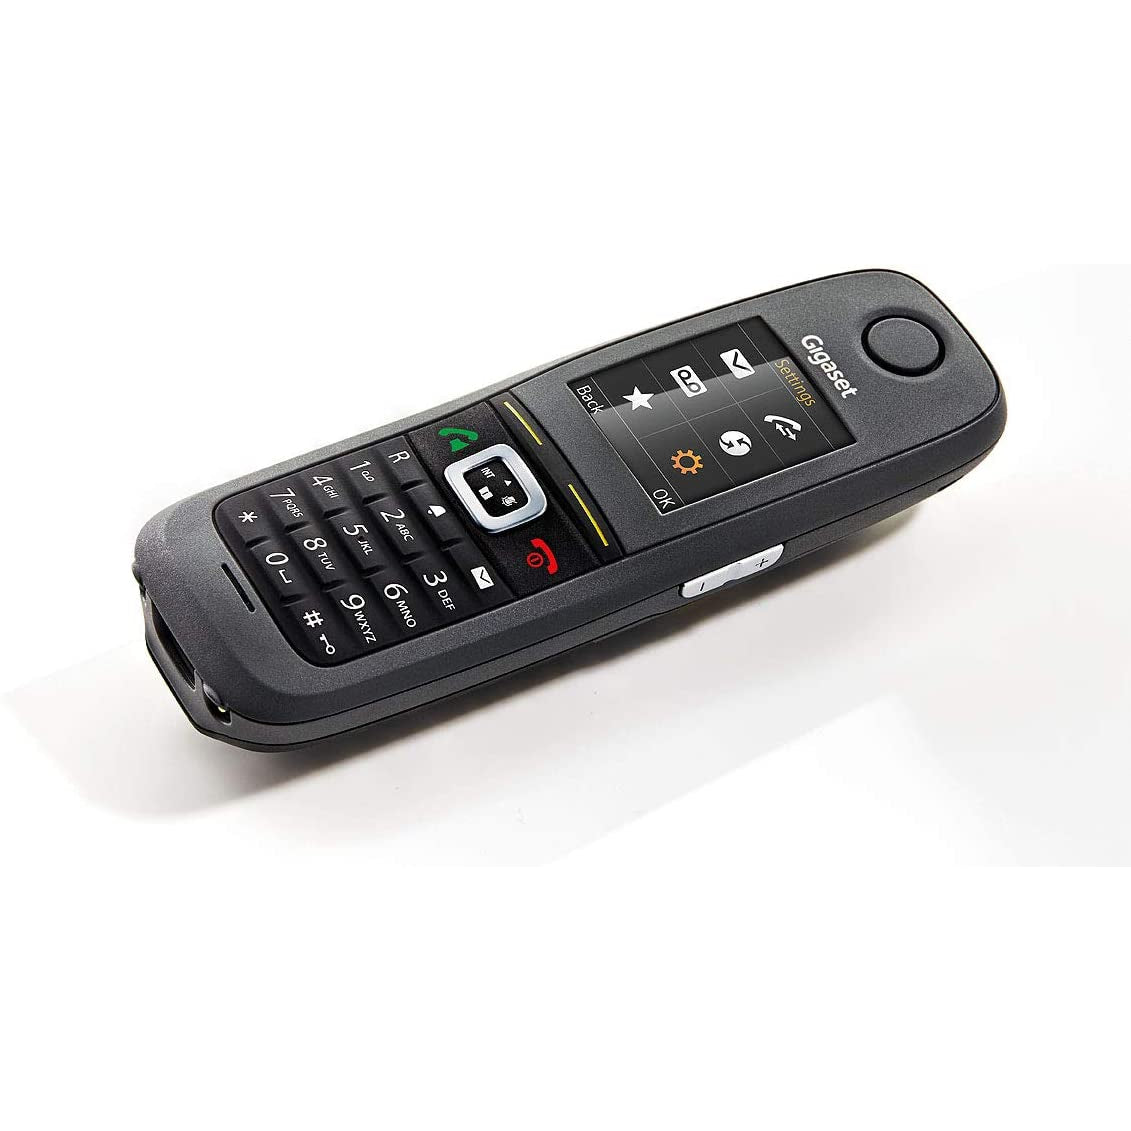 Gigaset R650H Pro Cordless VOIP Handset - Grey/Black